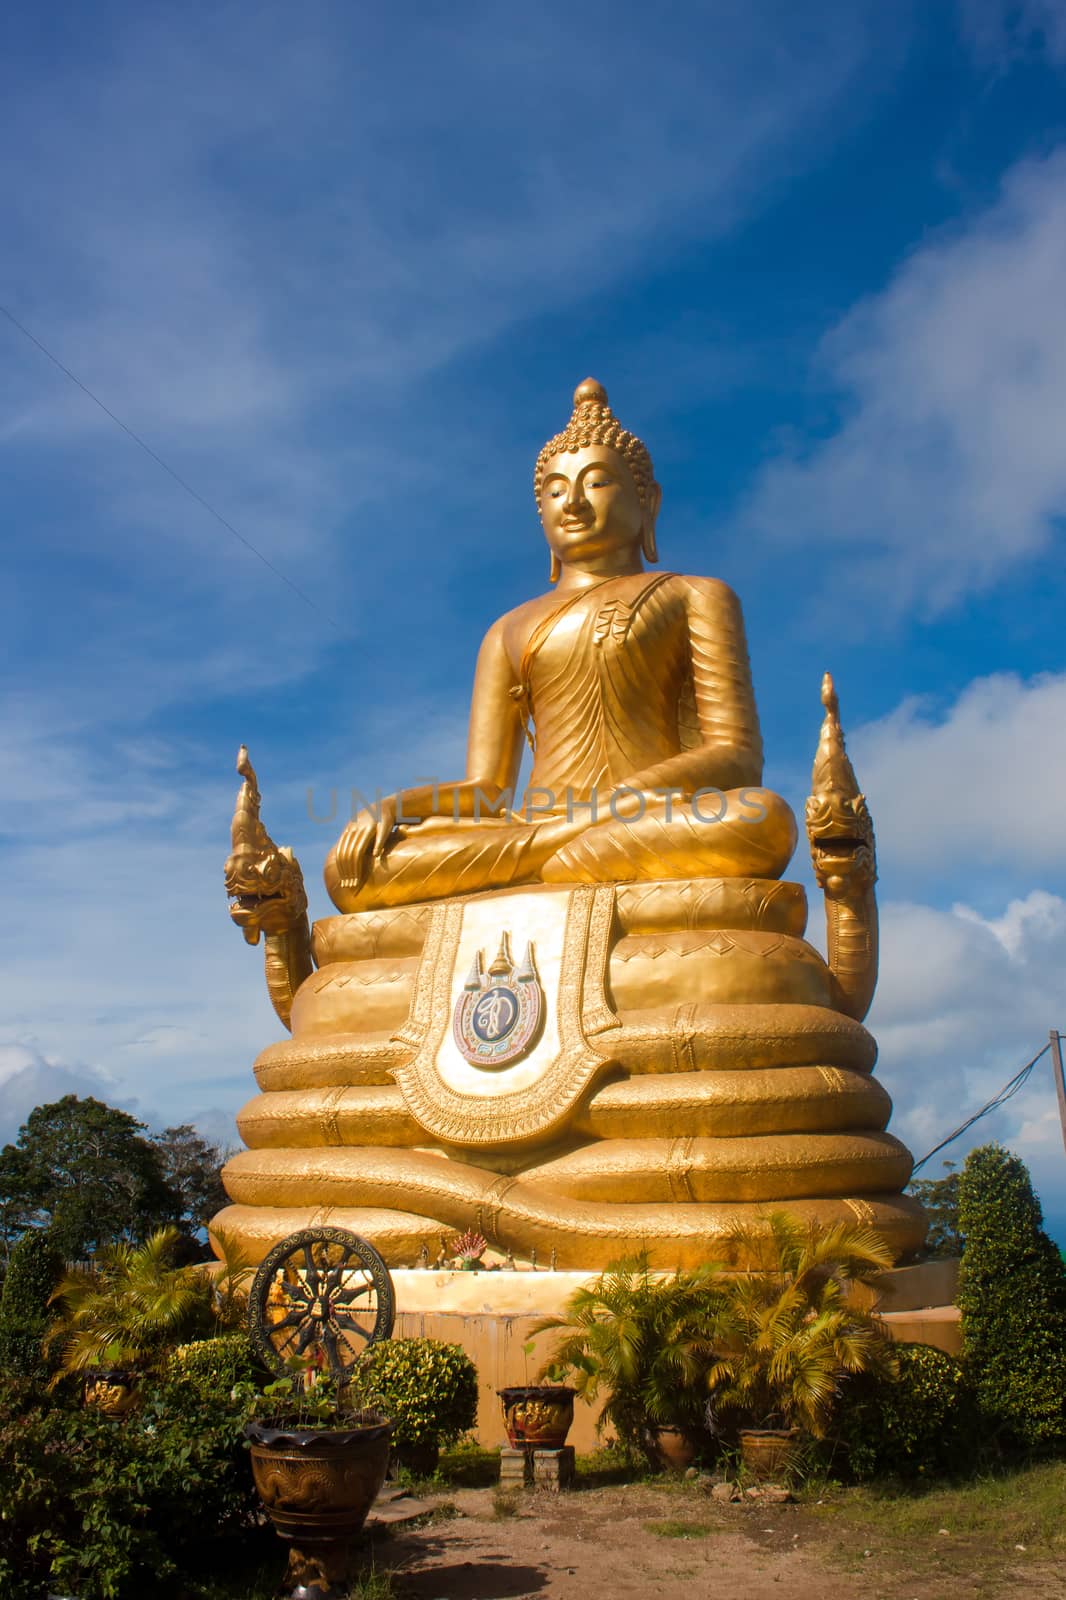 Golden Buggha near Big Buddha on the island Phuket, Thailand